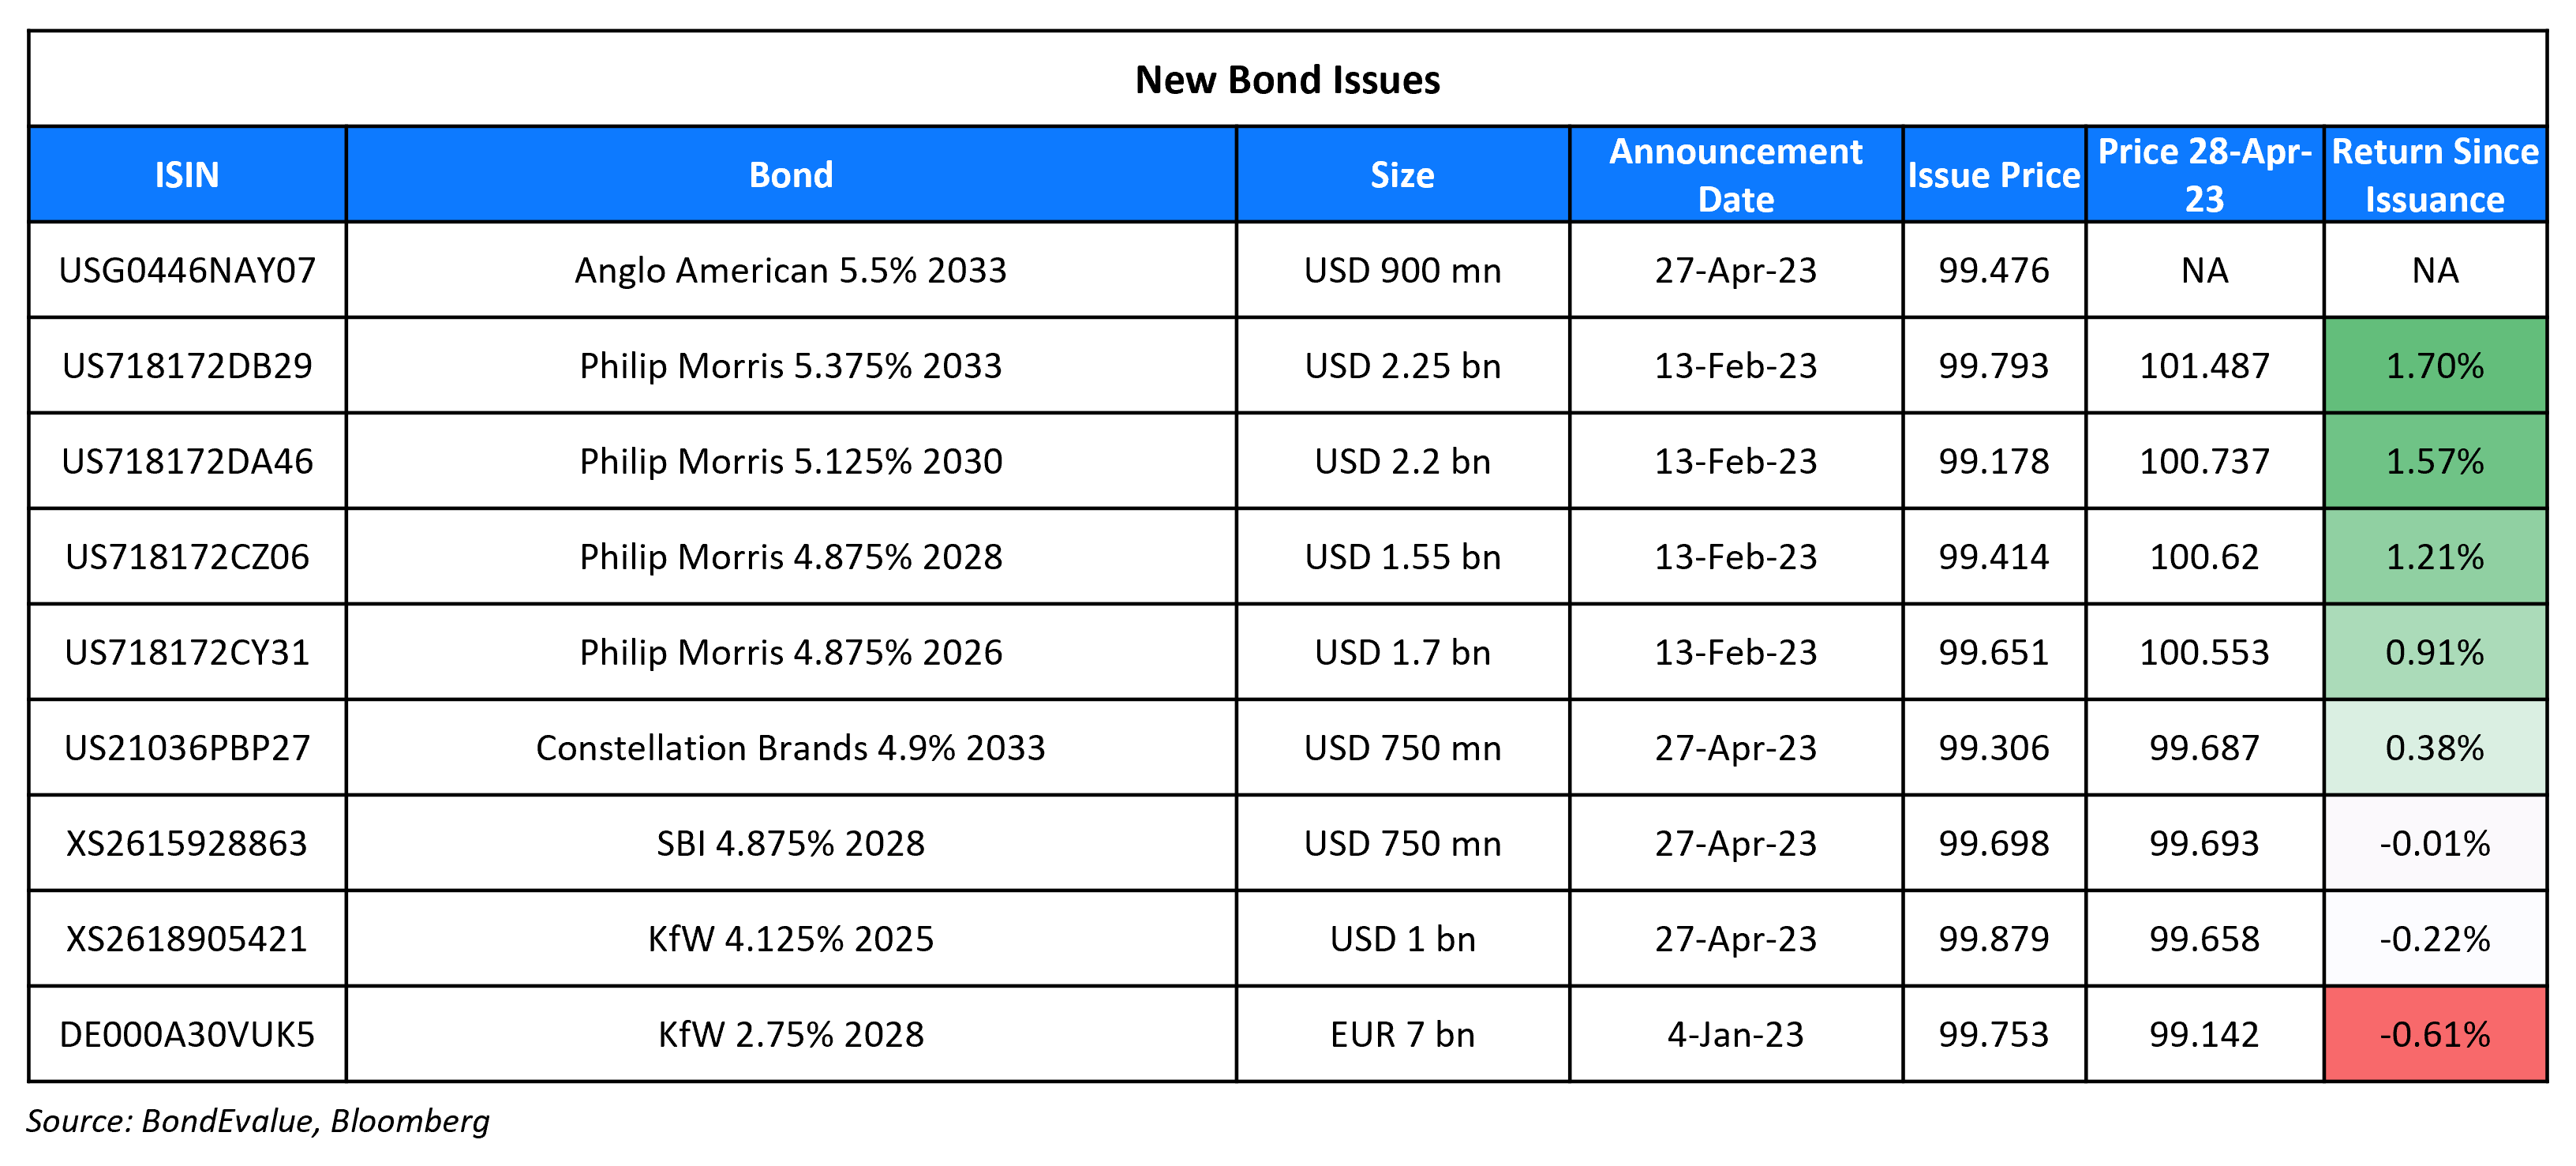 New Bond Issues 28 Apr 23